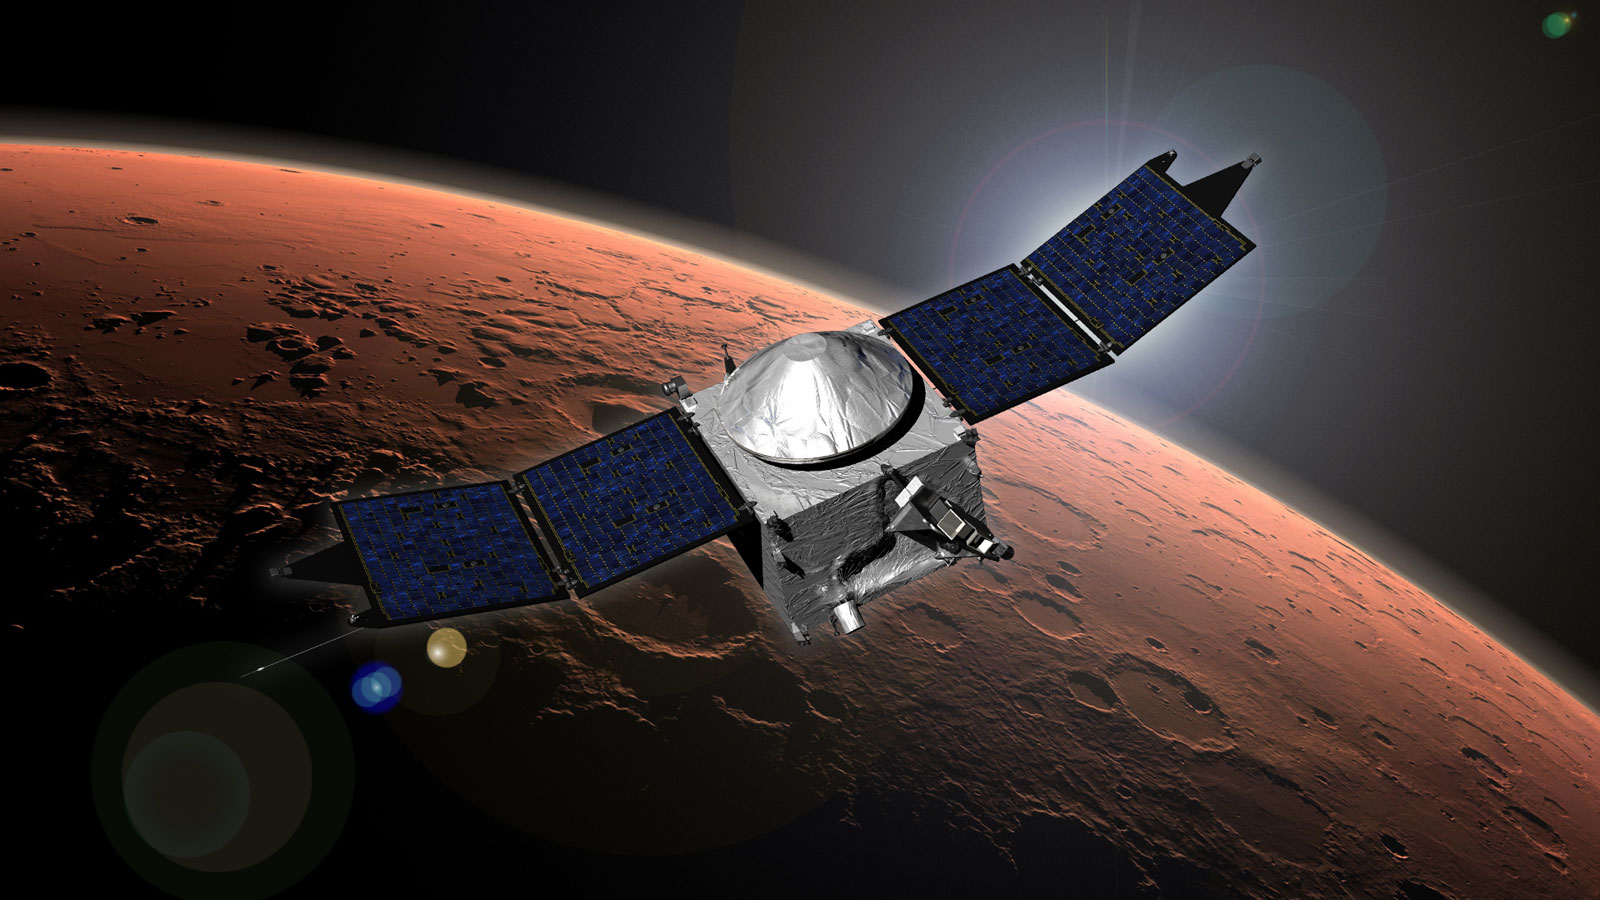 Figure 3: The MAVEN orbiter as it orbits Mars. Credit: NASA/Goddard Space Flight Center